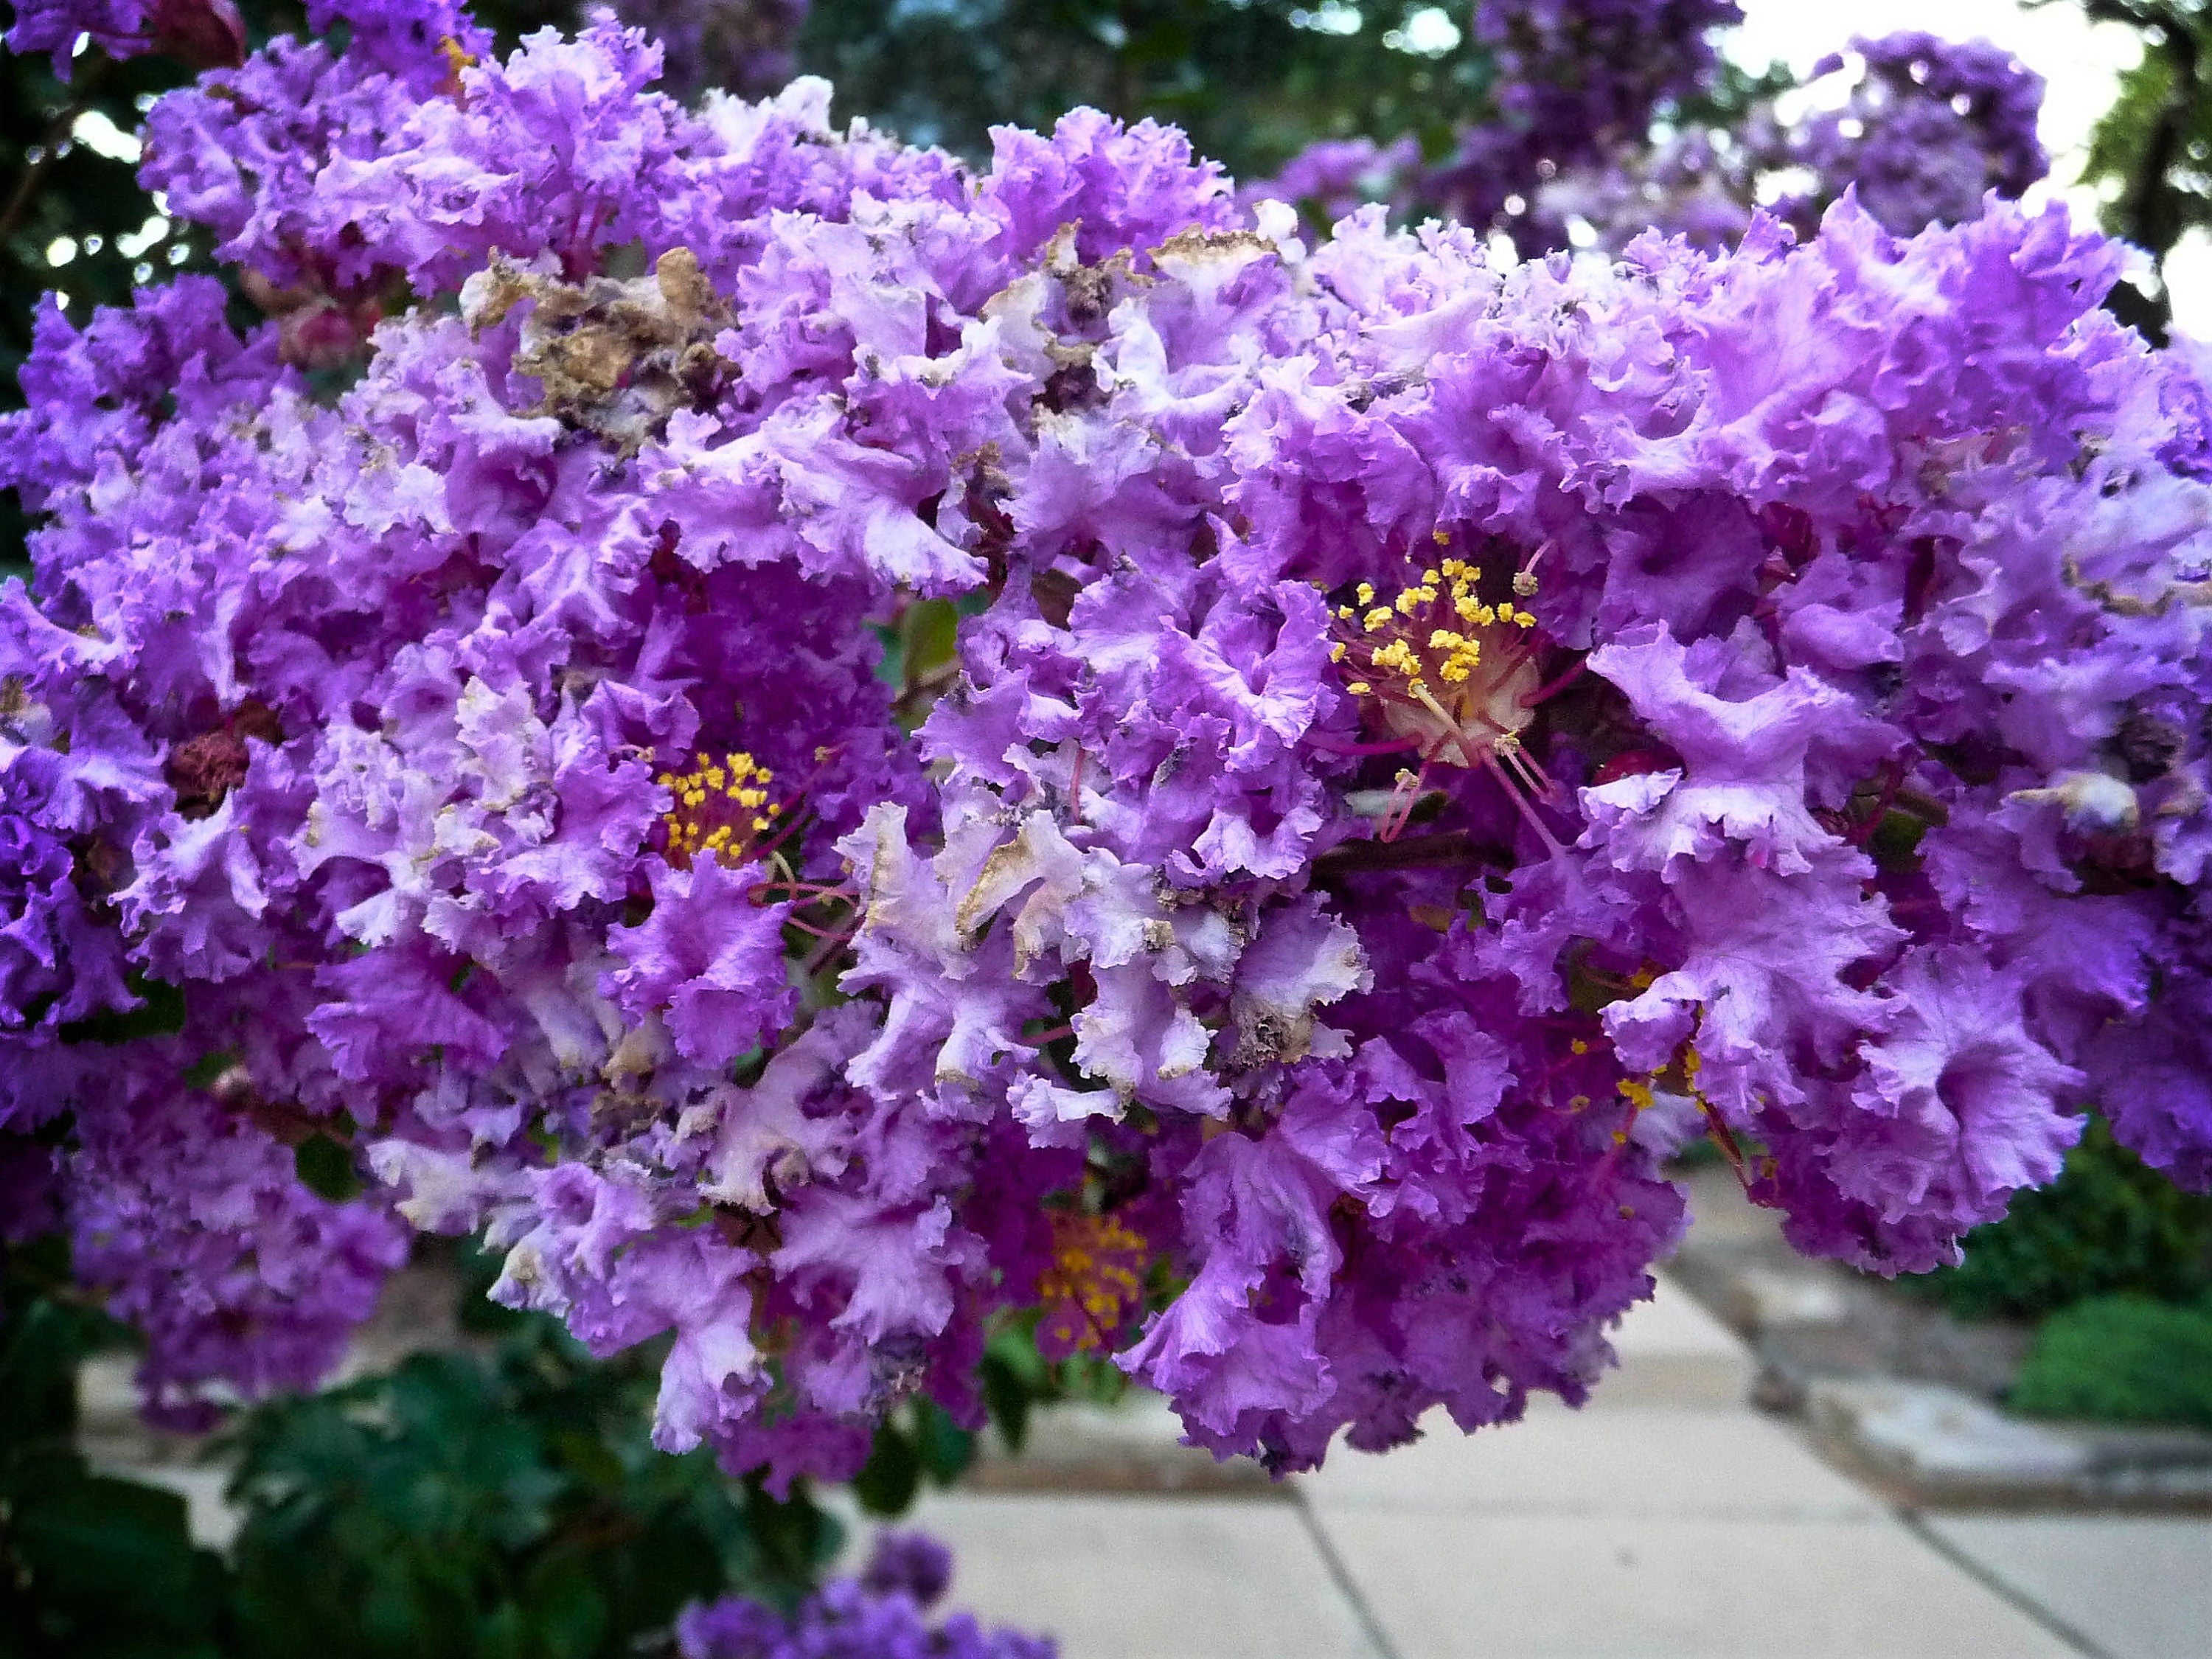 Image of Crepe myrtle purple flower bush